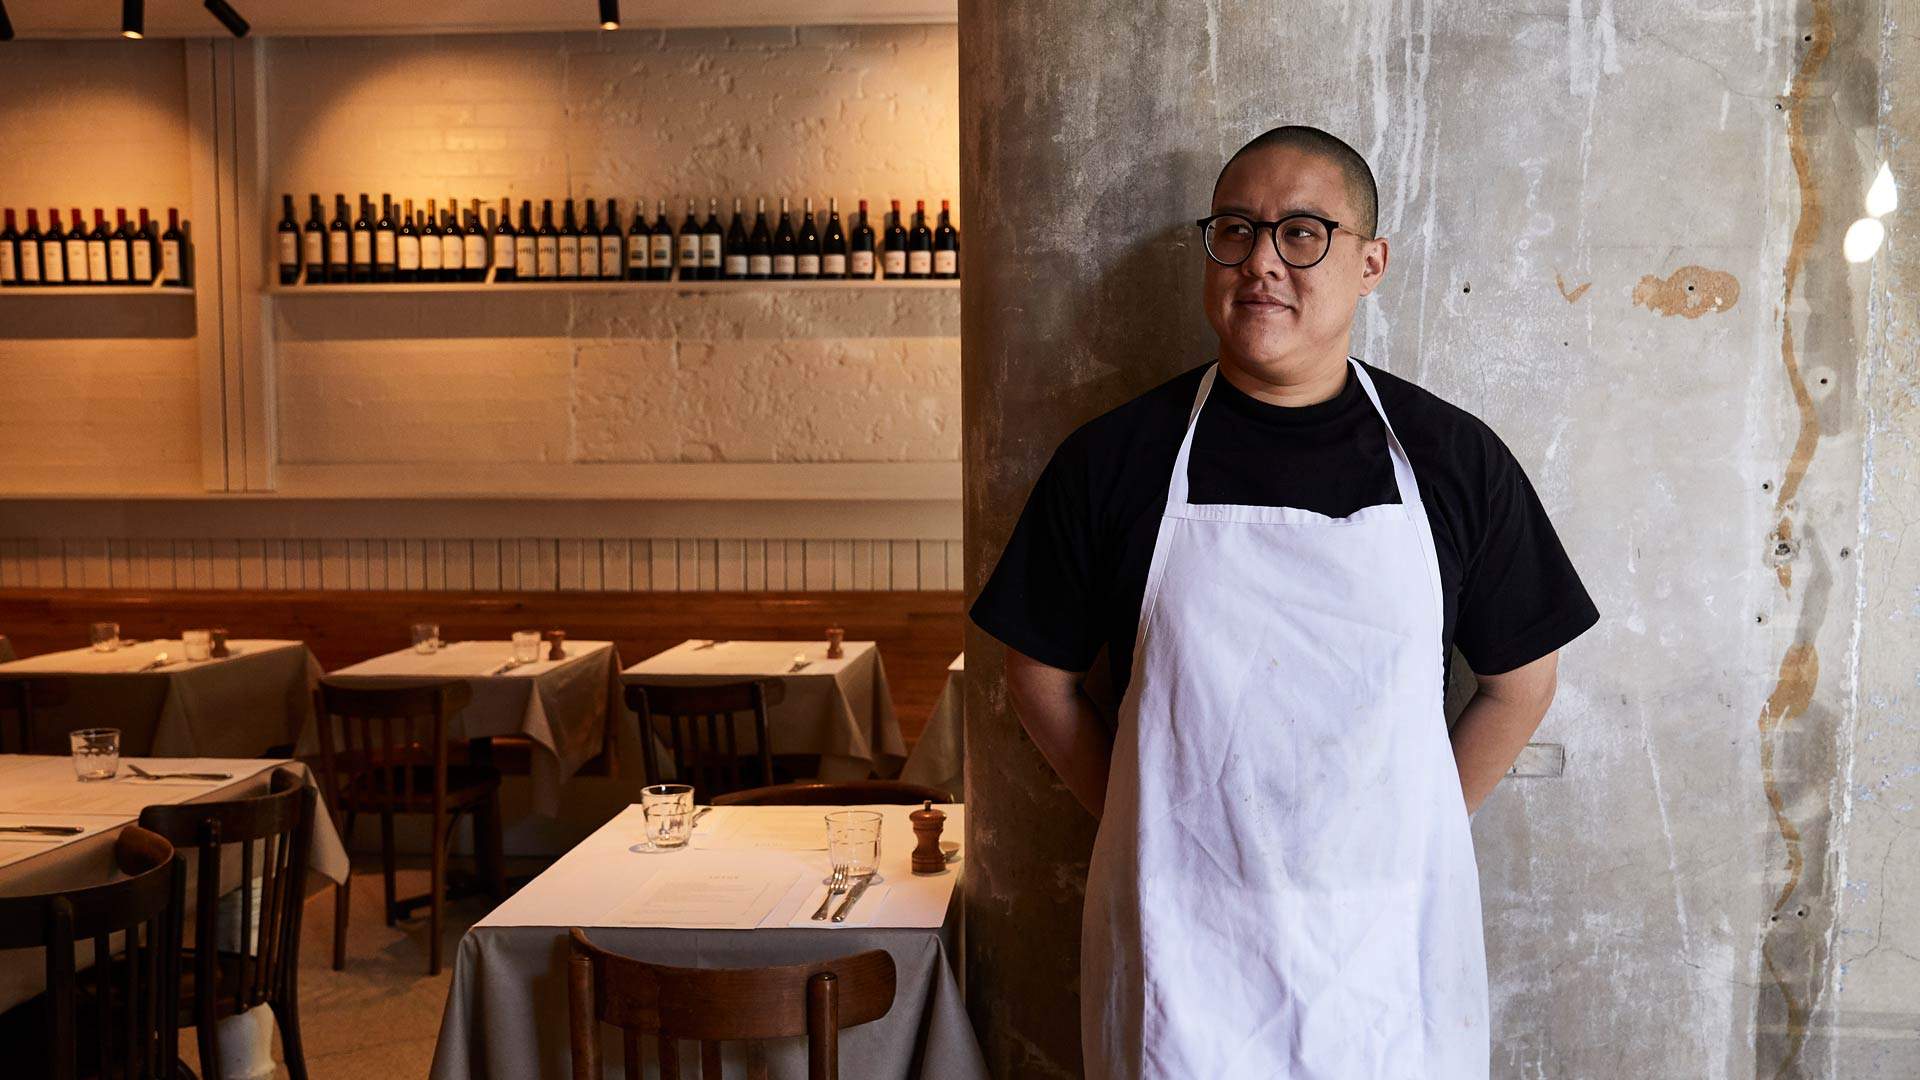 Merivale's Award-Winning Lotus Restaurant Has Reopened with Dan Hong at the Helm